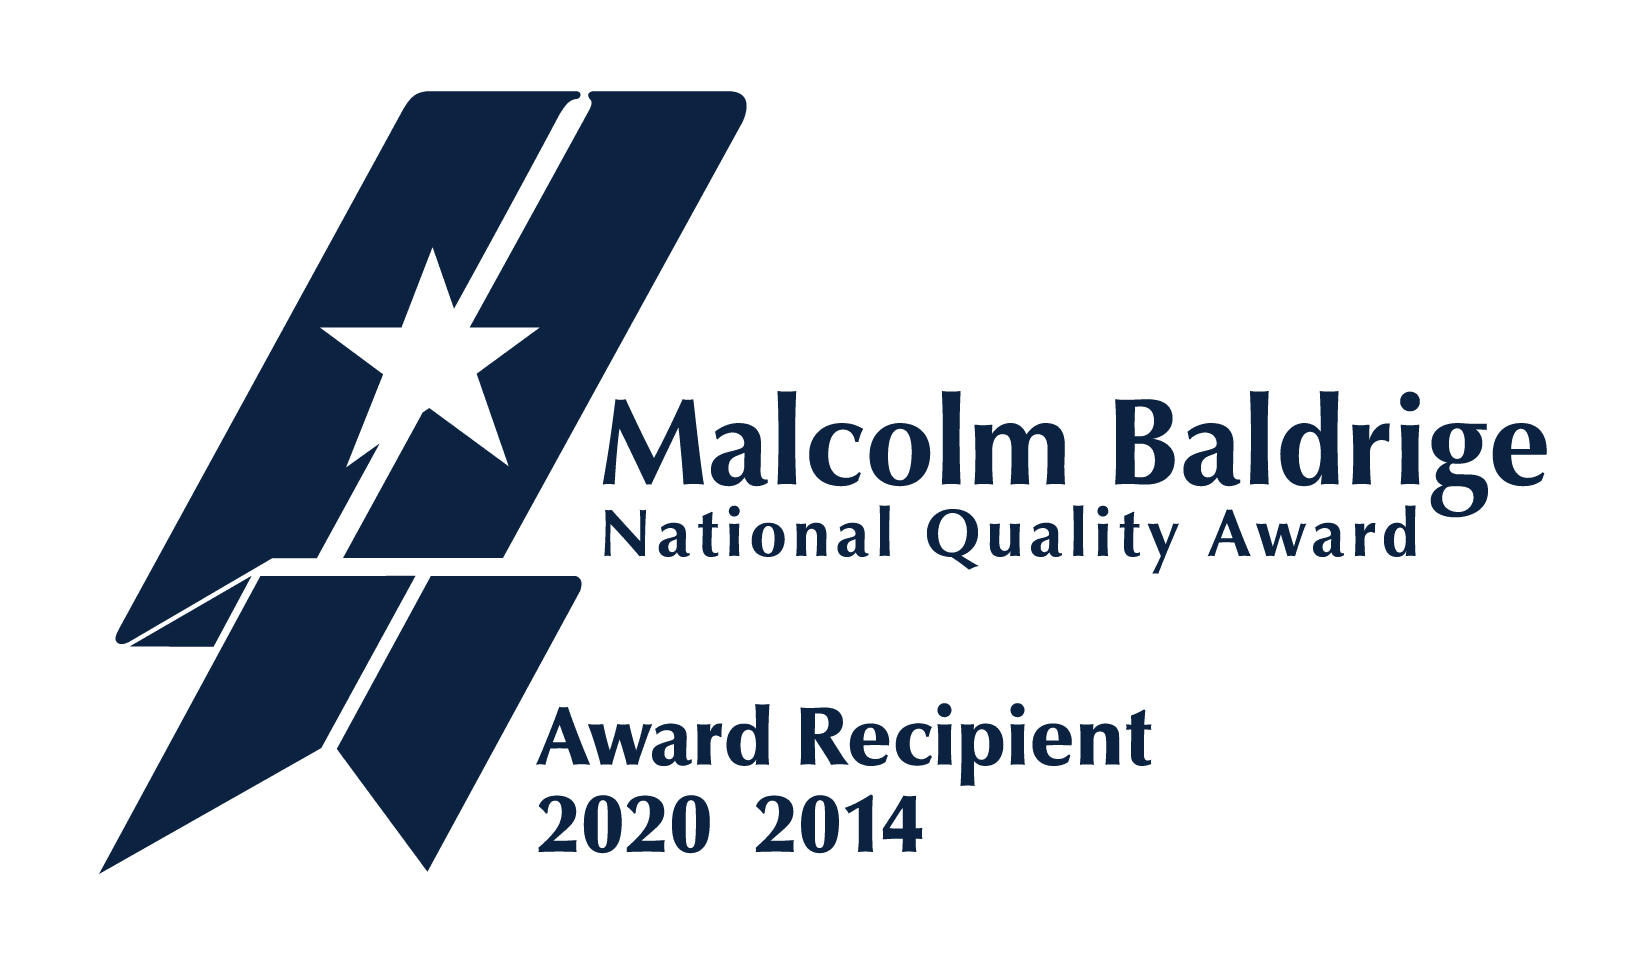 Malcolm Baldrige National Quality Award Award Recipient 2020 & 2014